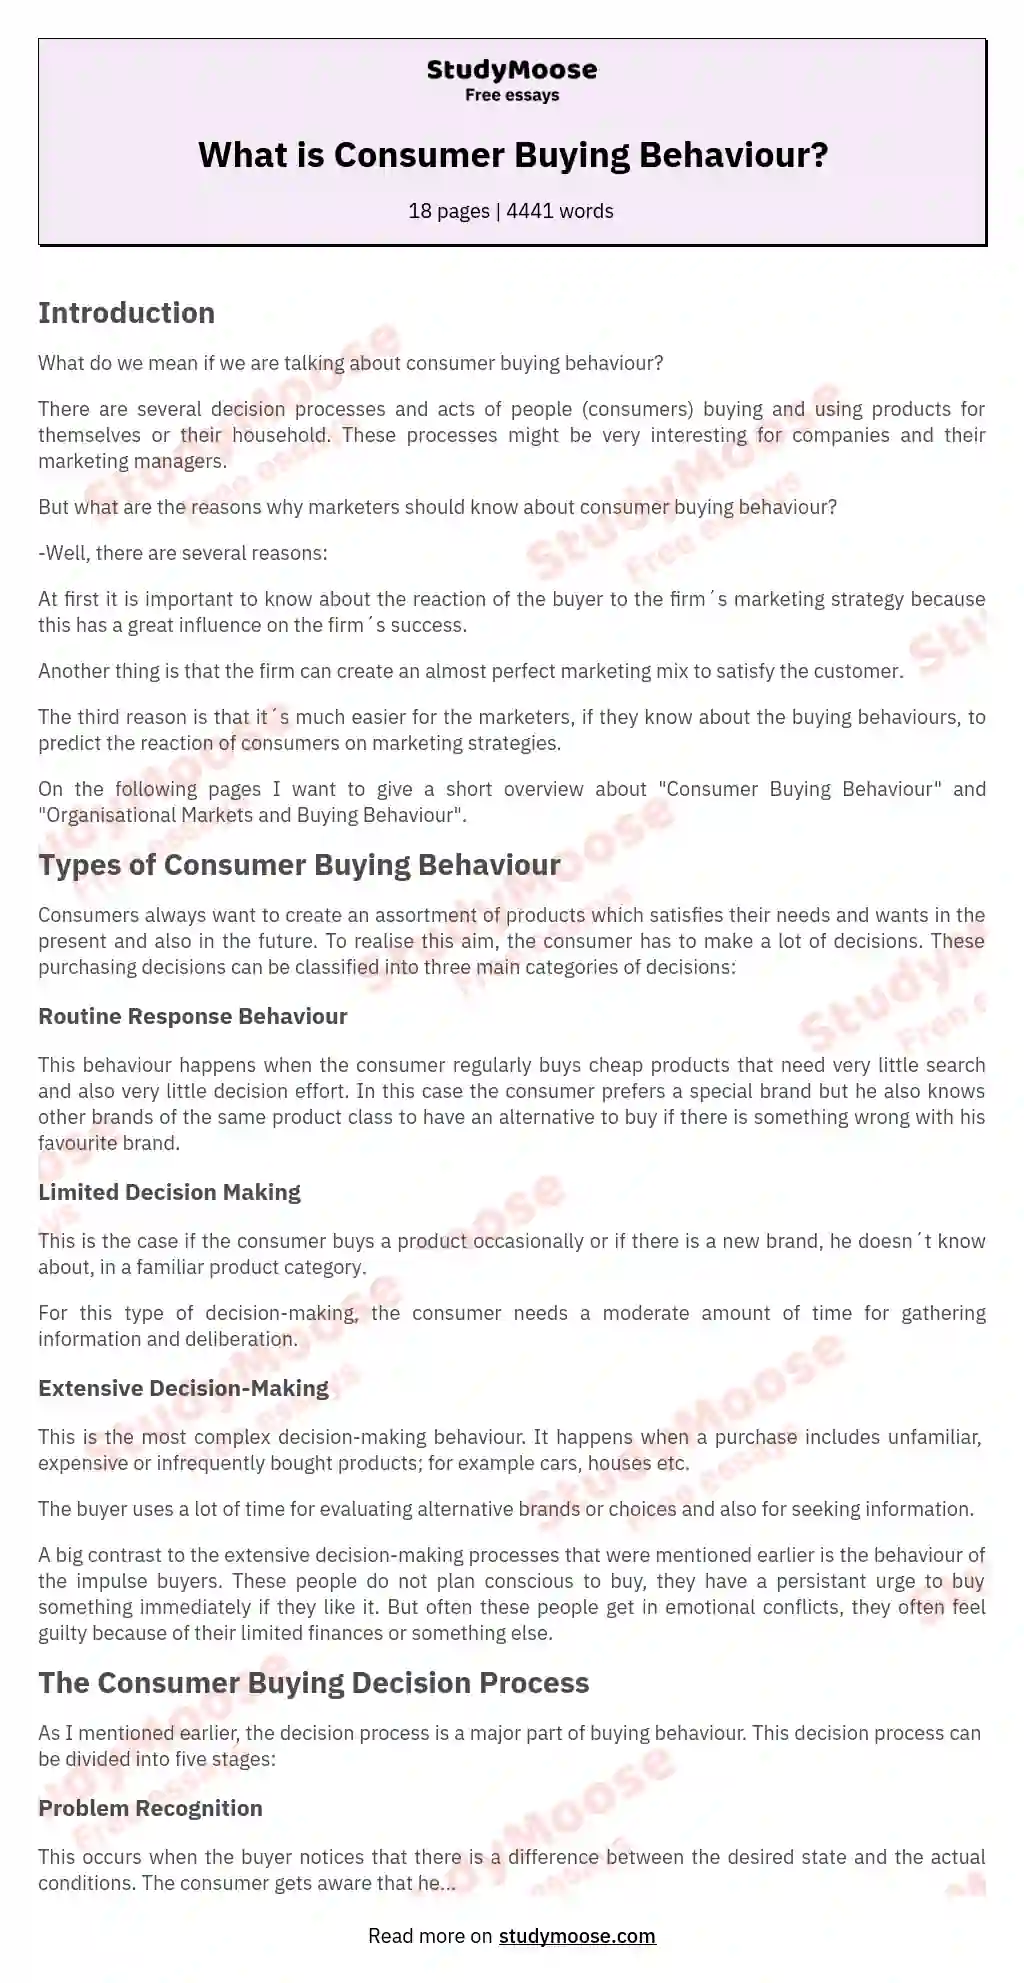 What is Consumer Buying Behaviour?